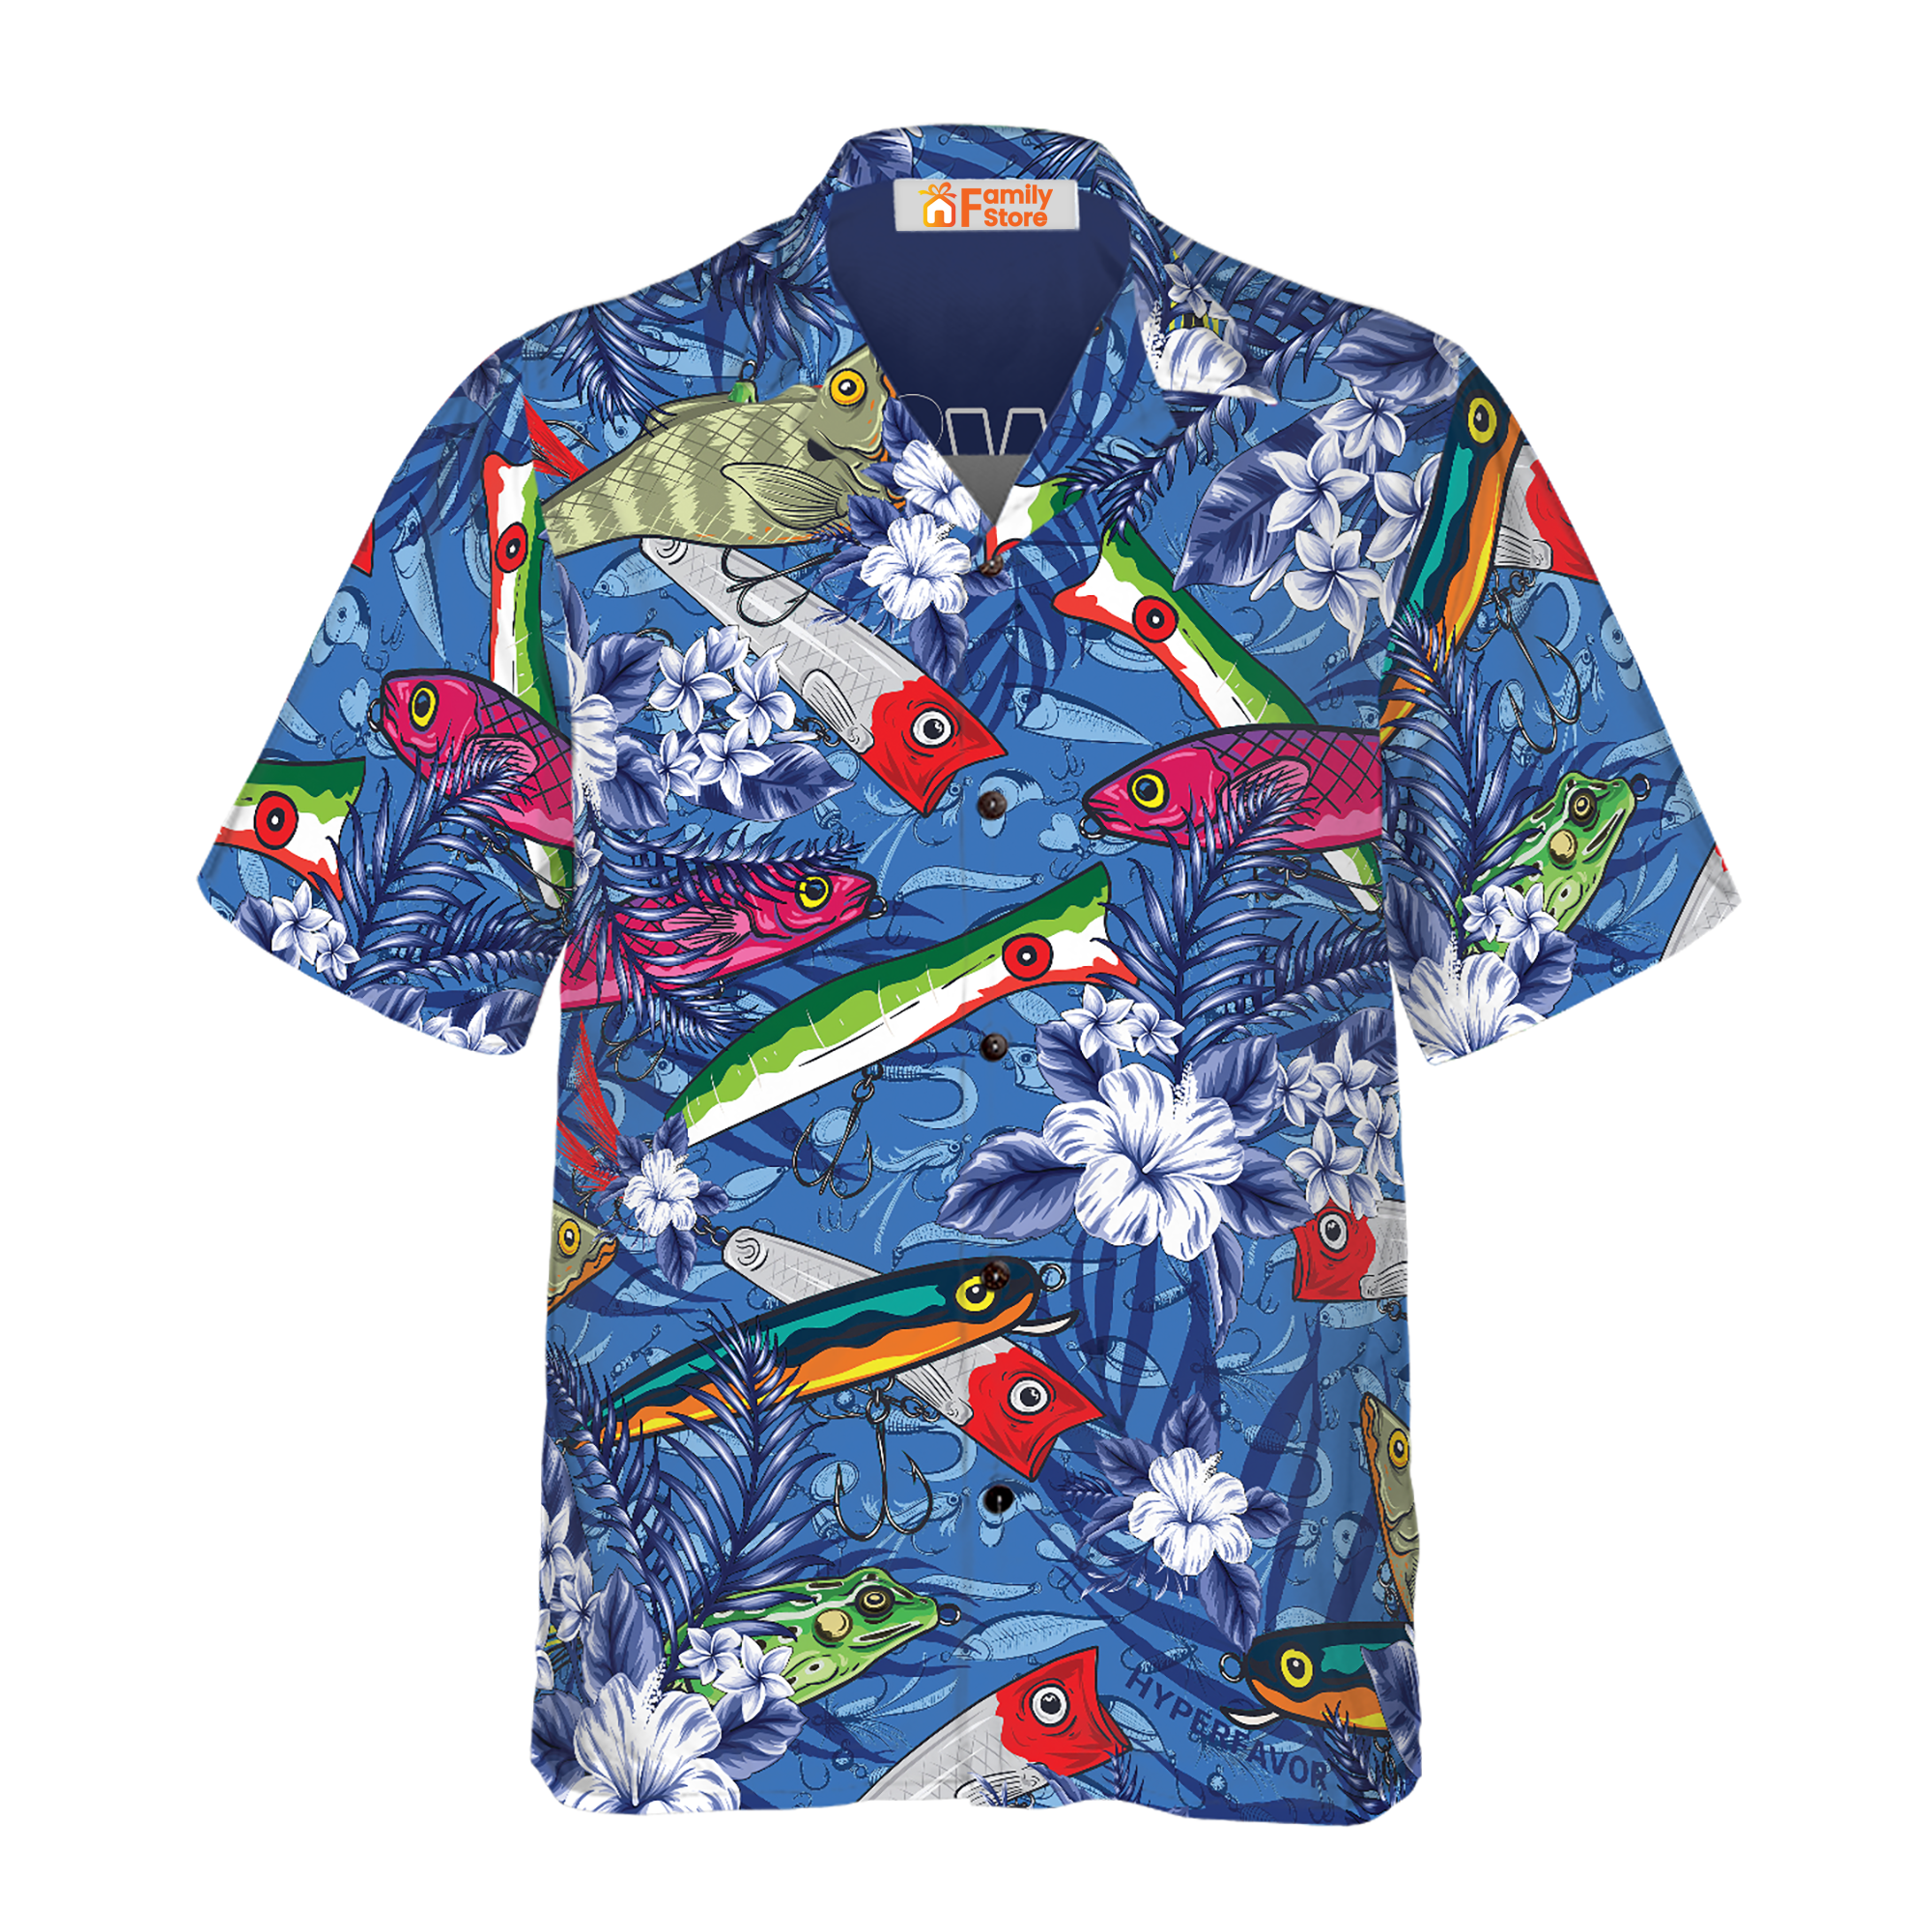 Where The Fish Fishing - Hawaiian Shirt